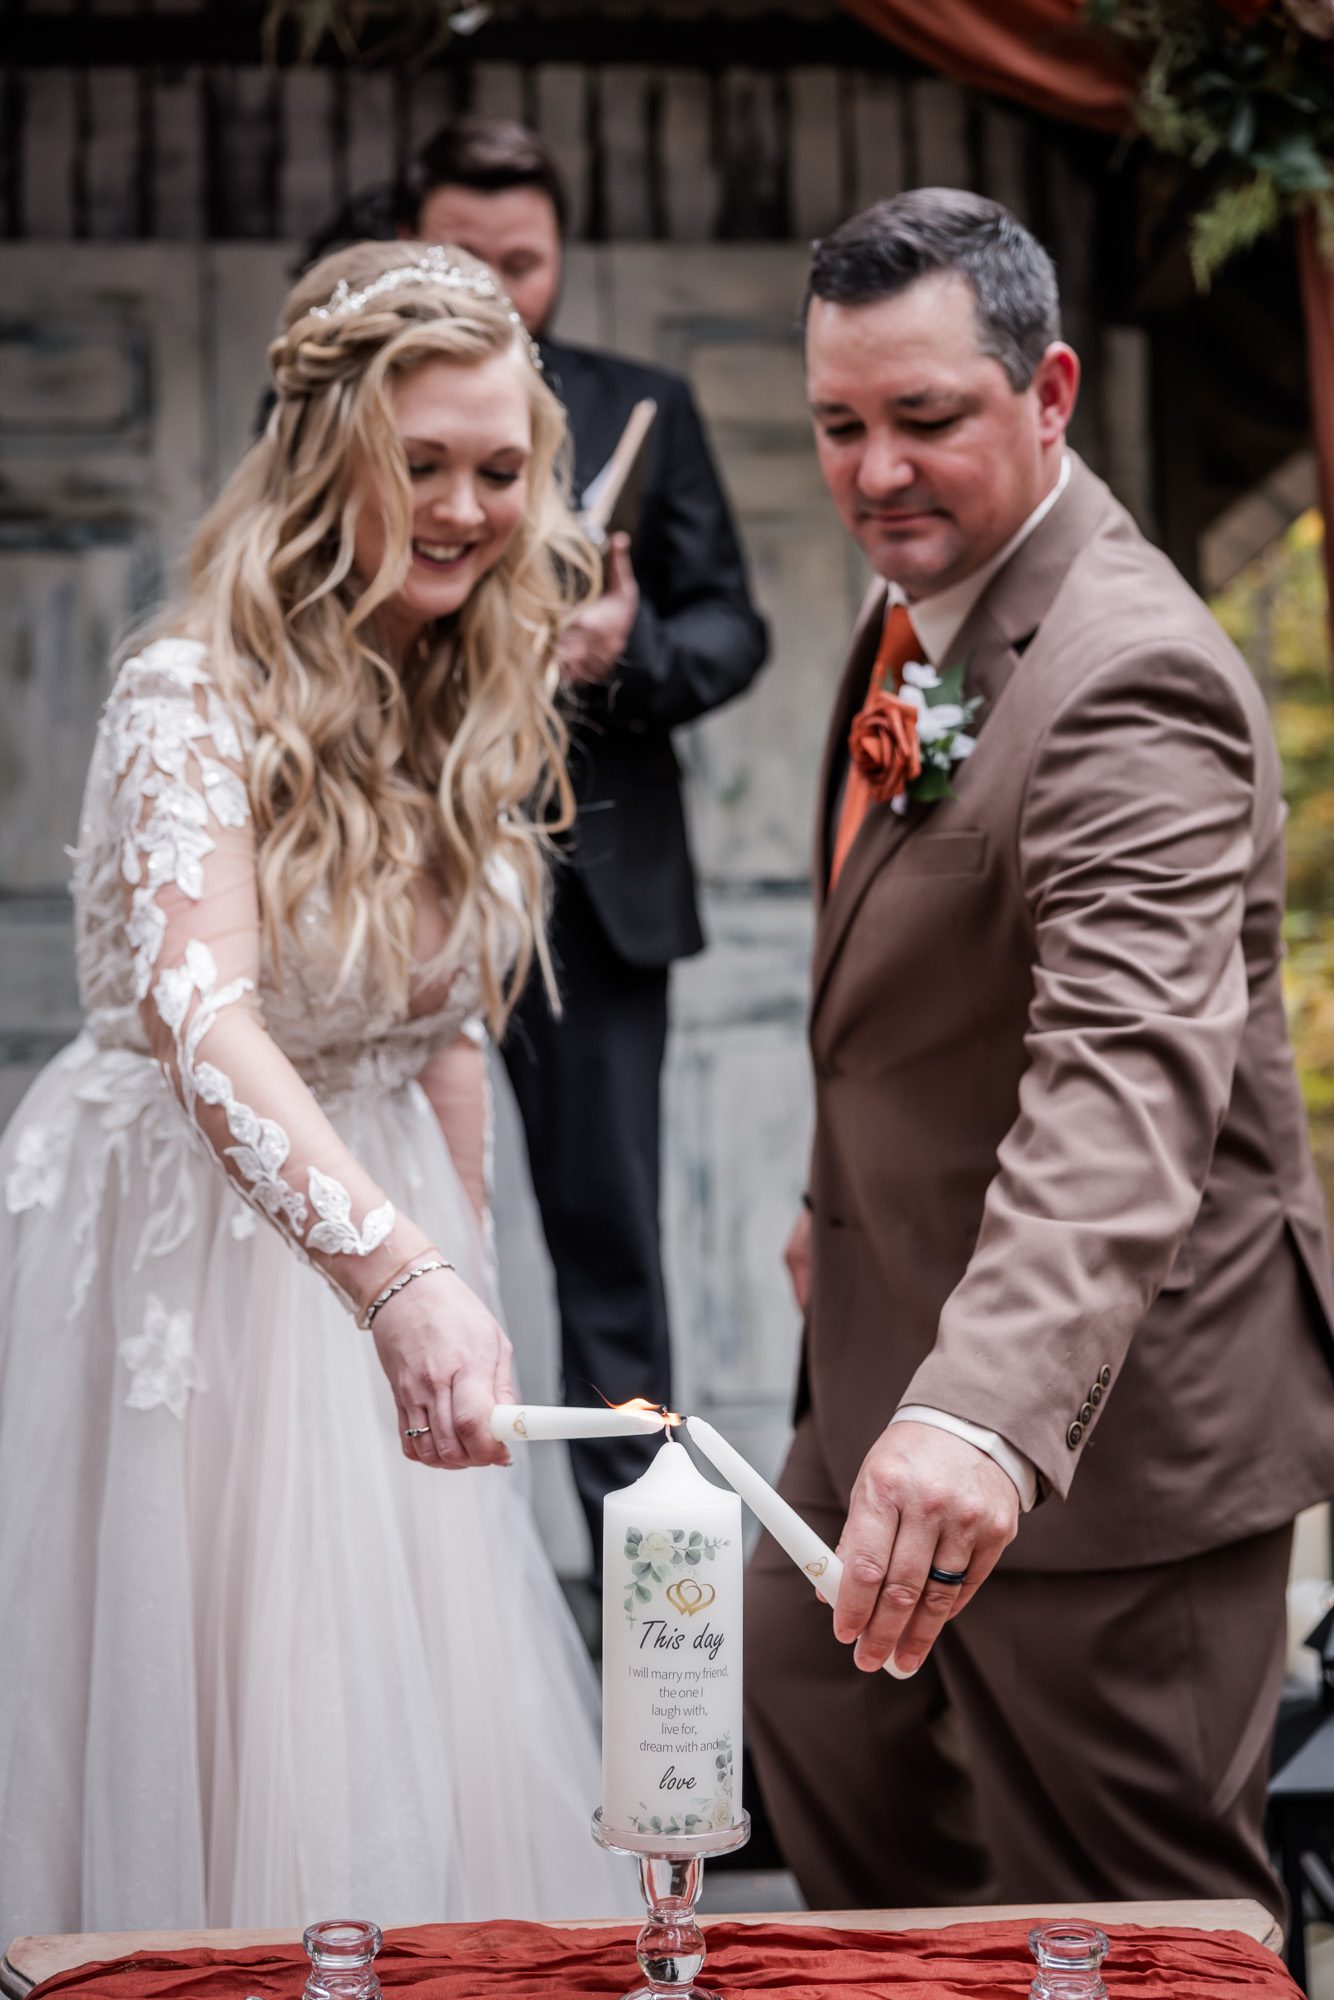 Fall Micro Wedding in the Smoky Mountains